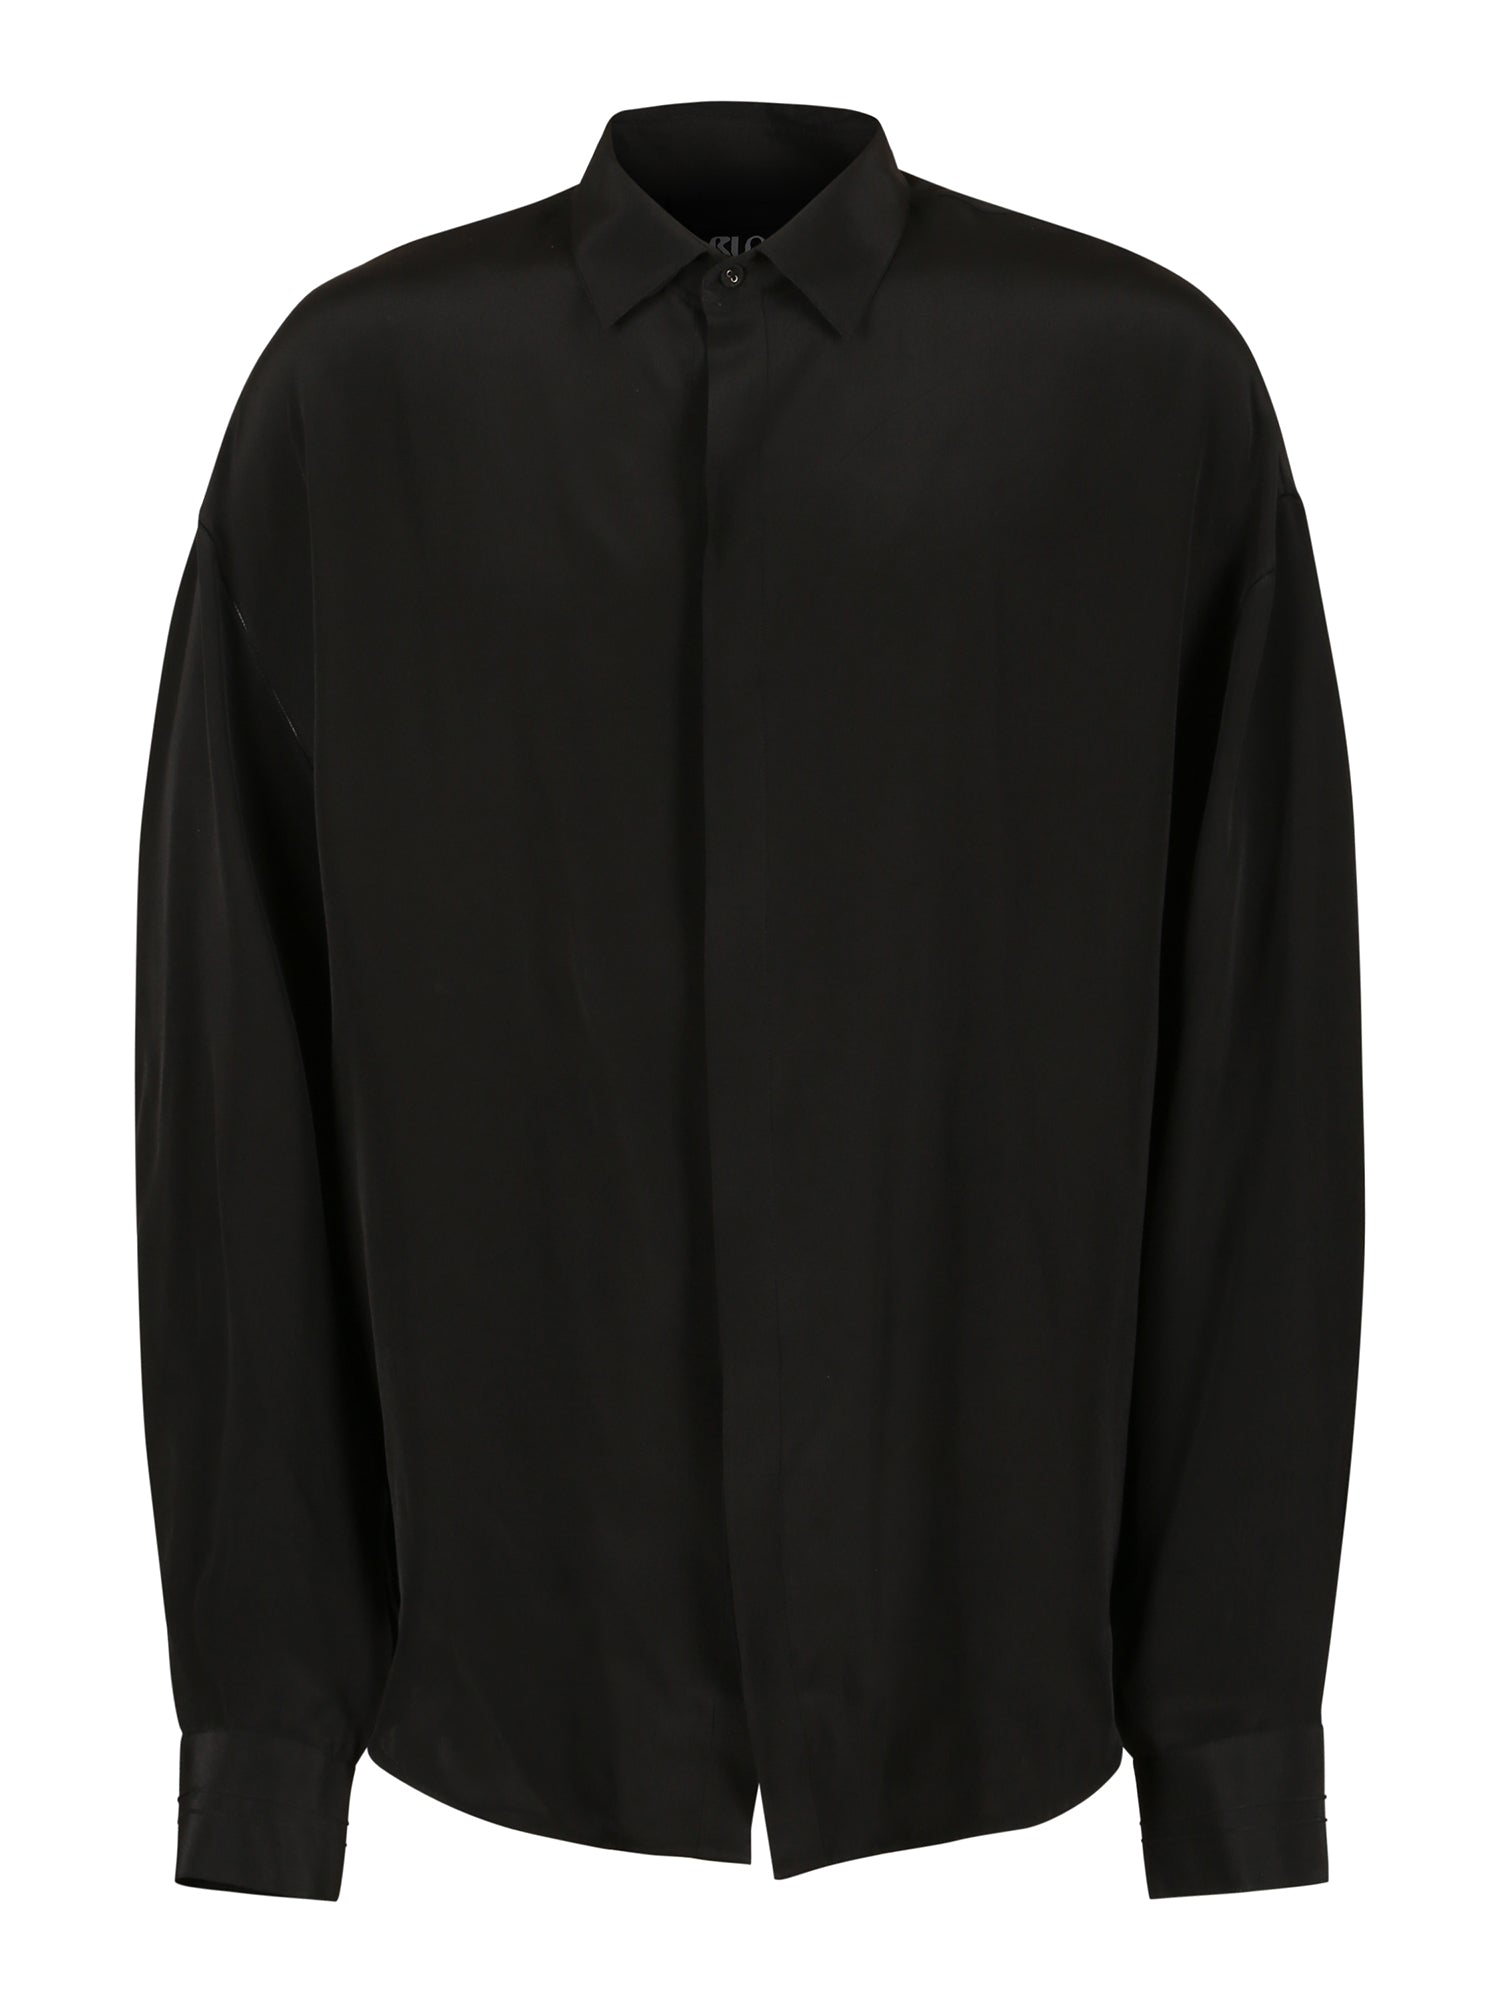 Drop shoulder black crepe shirt